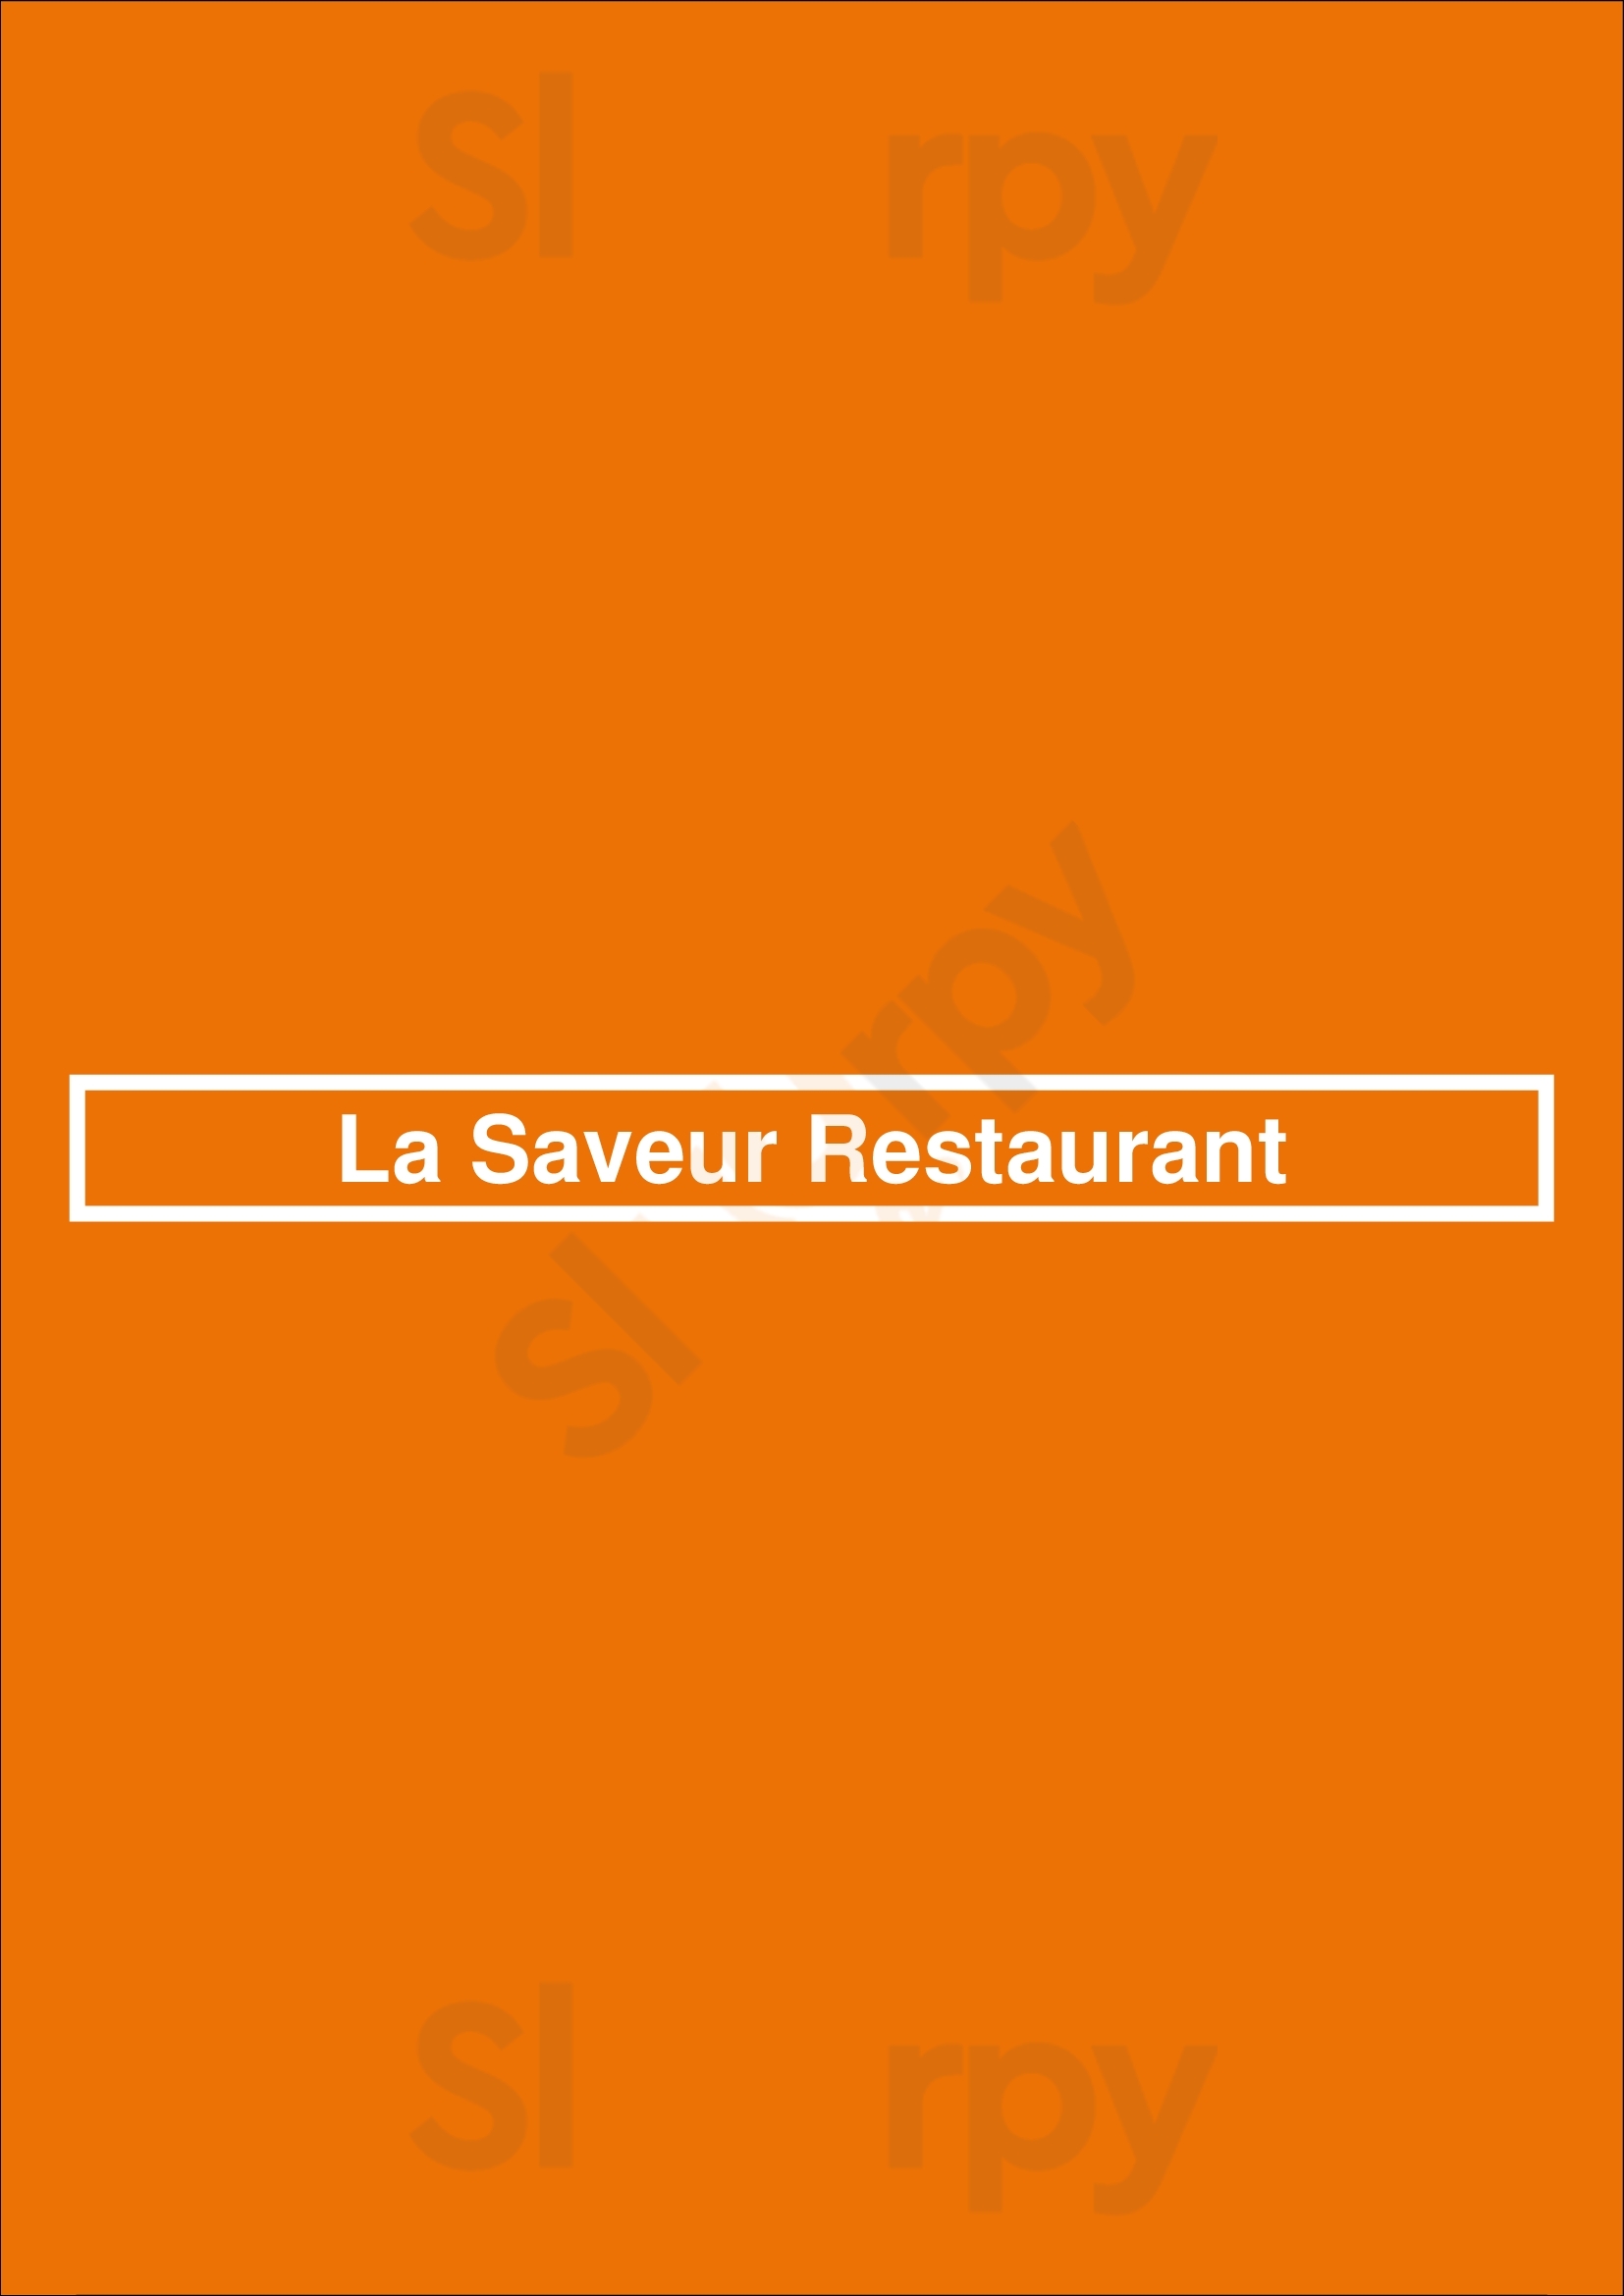 La Saveur Restaurant Cardiff Menu - 1